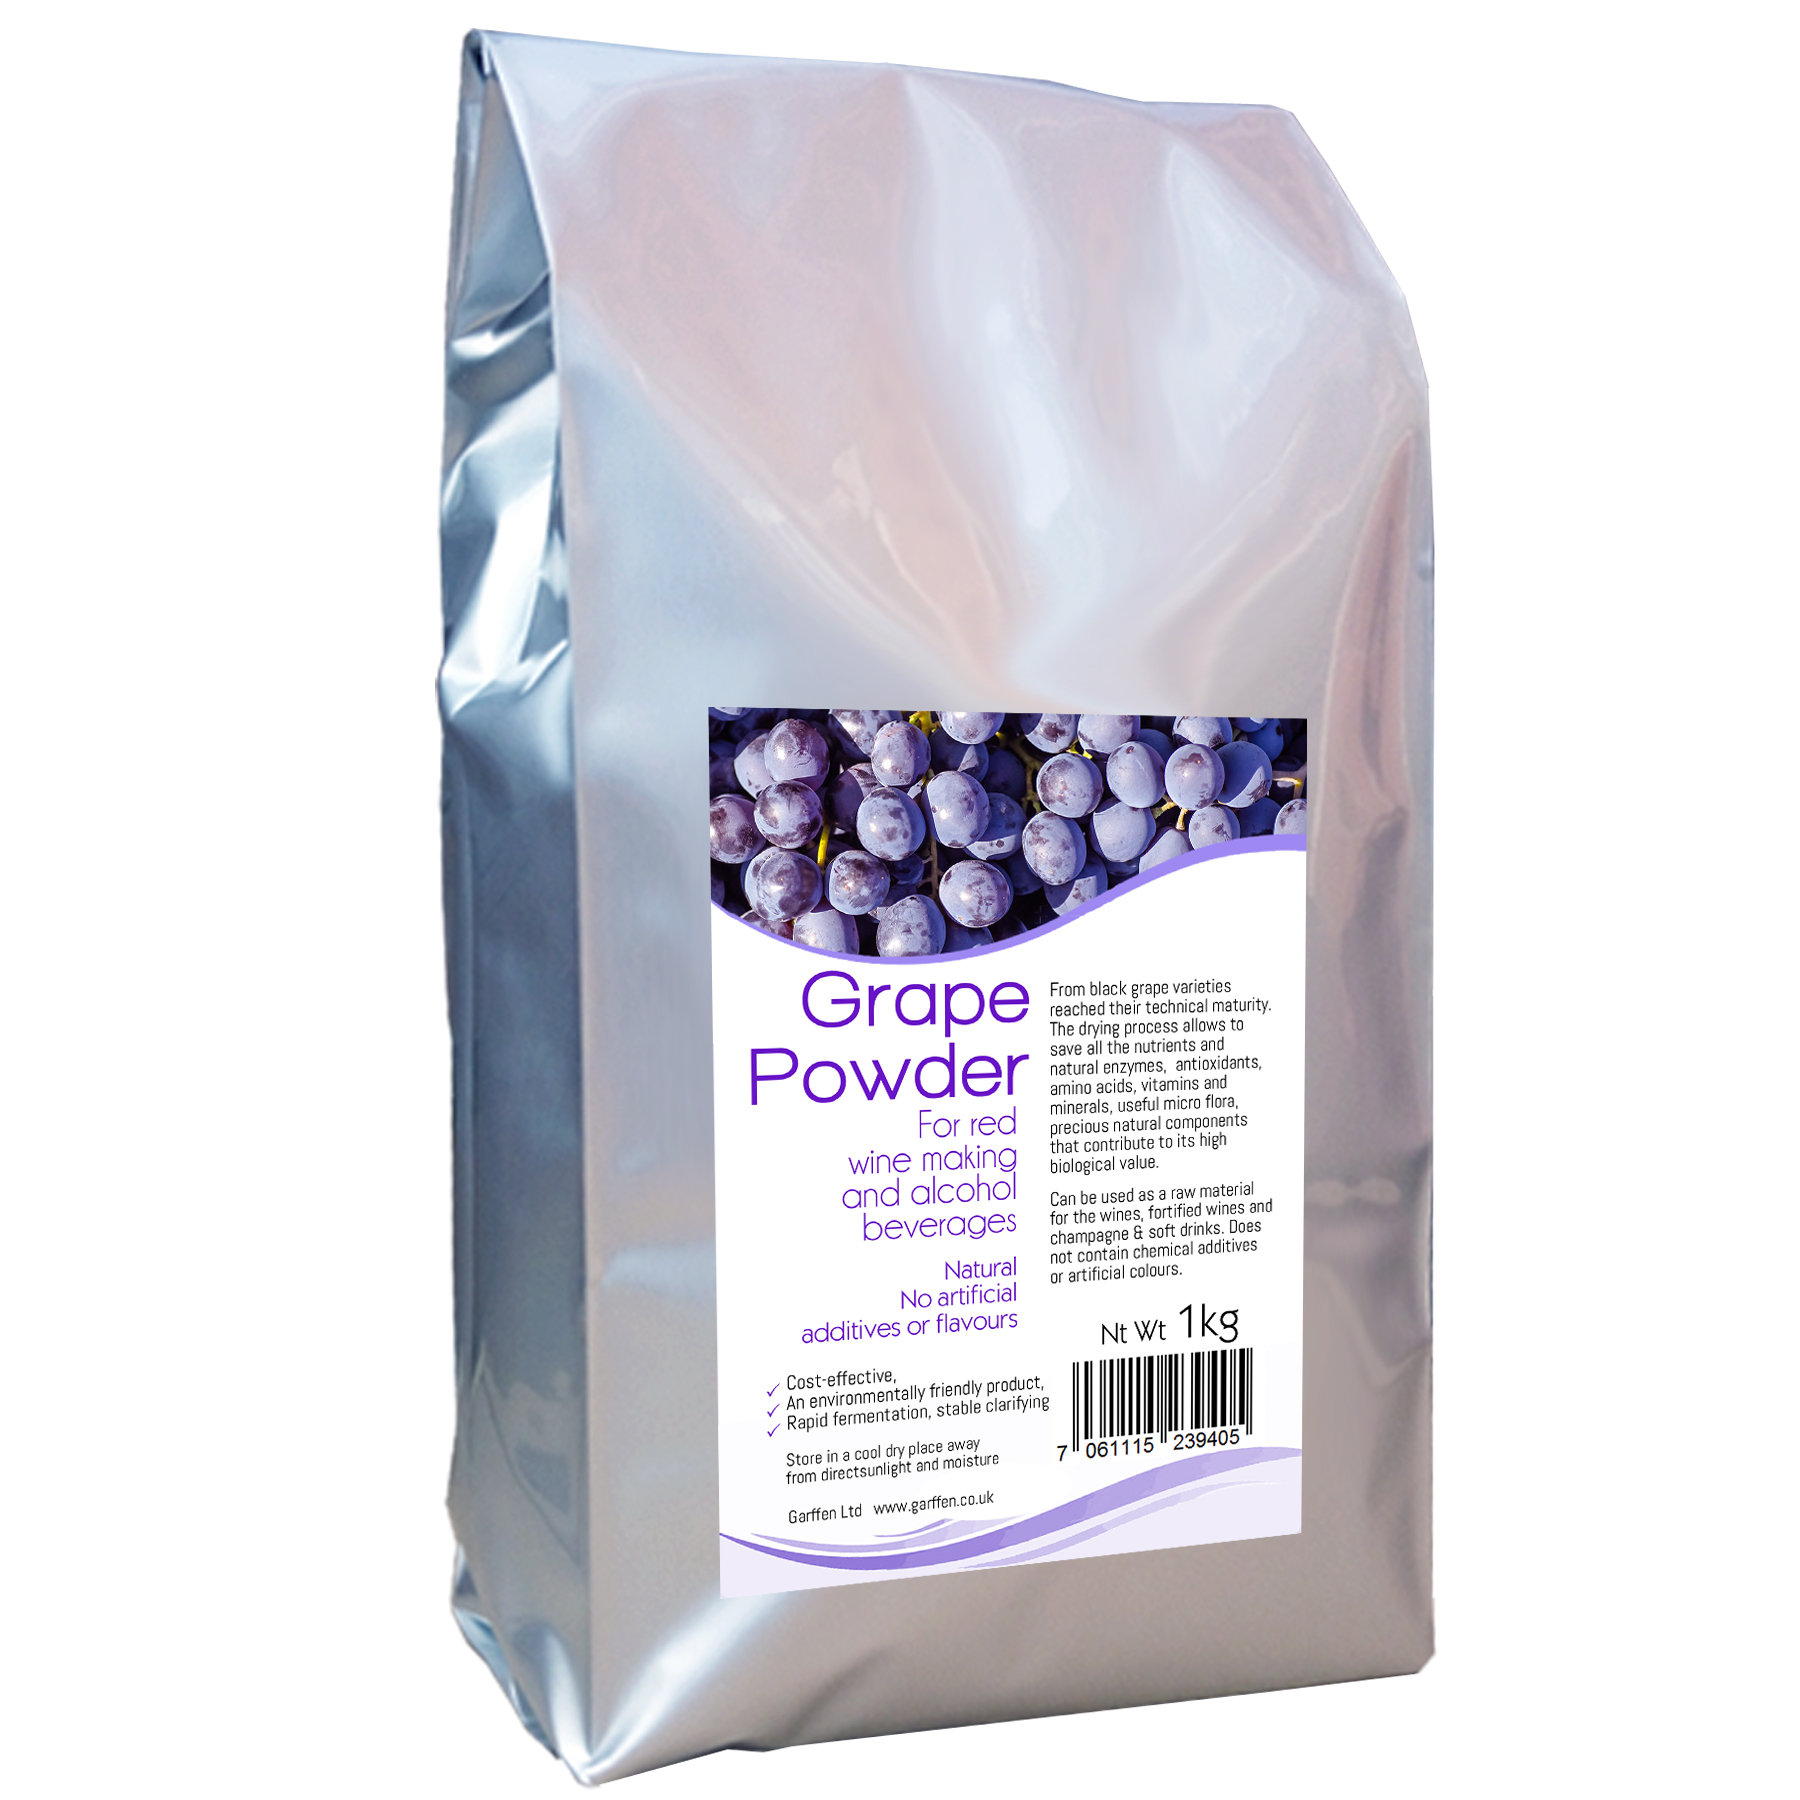 Grape powder for wine making